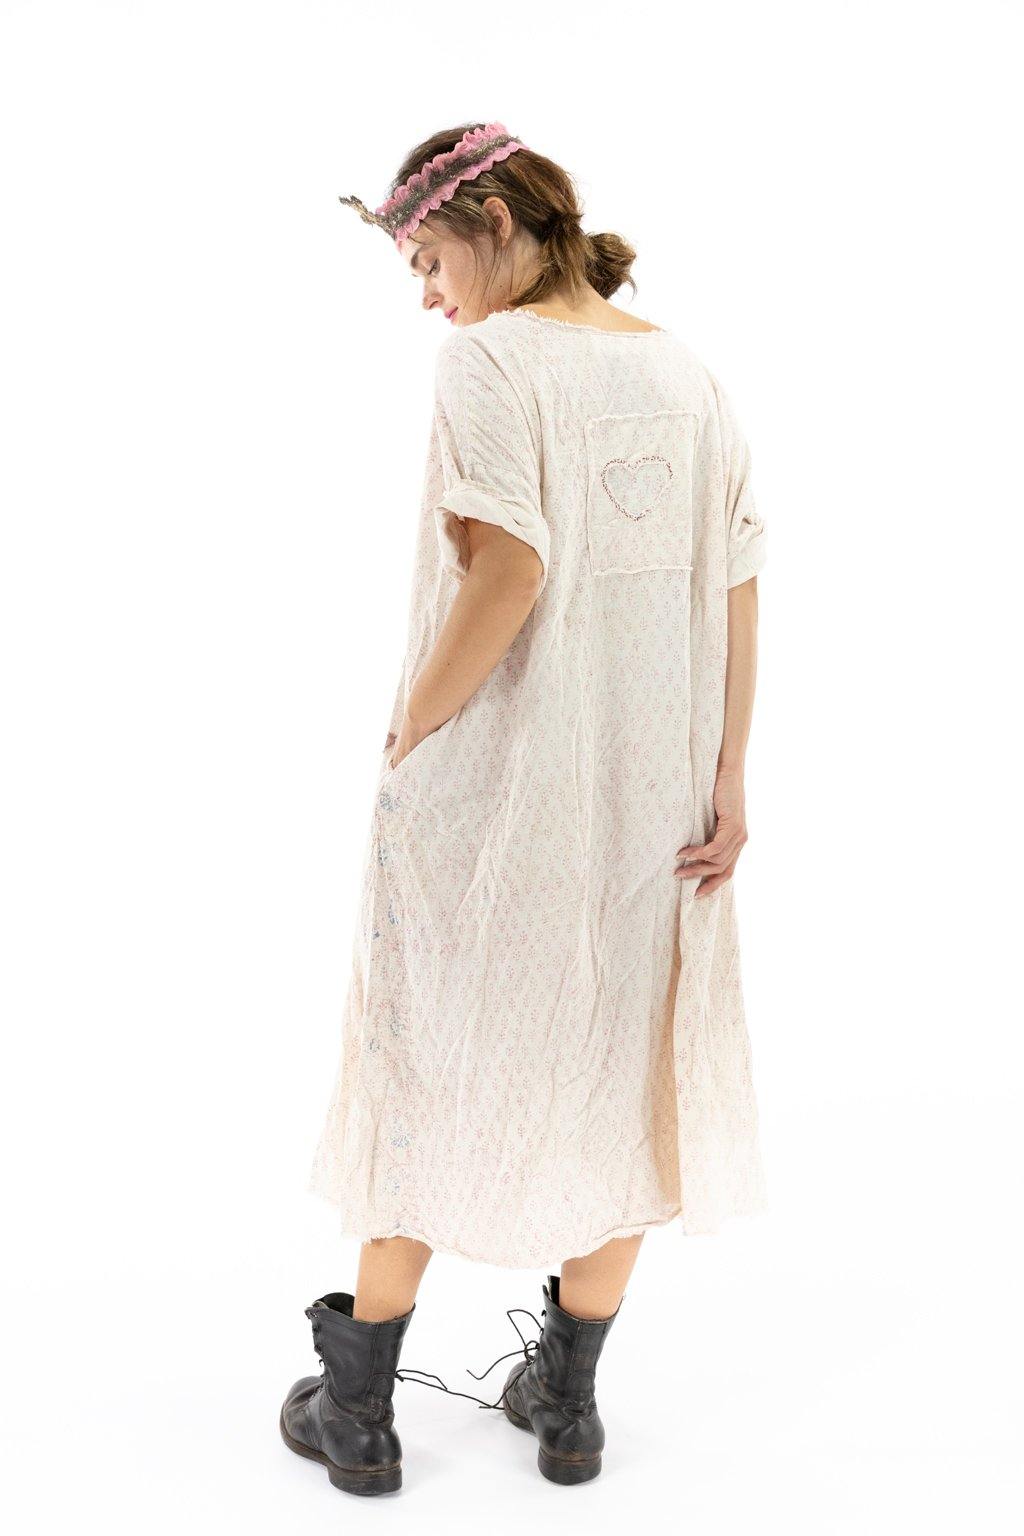 Evolve Artist Smock Dress - Magnolia Pearl Clothing